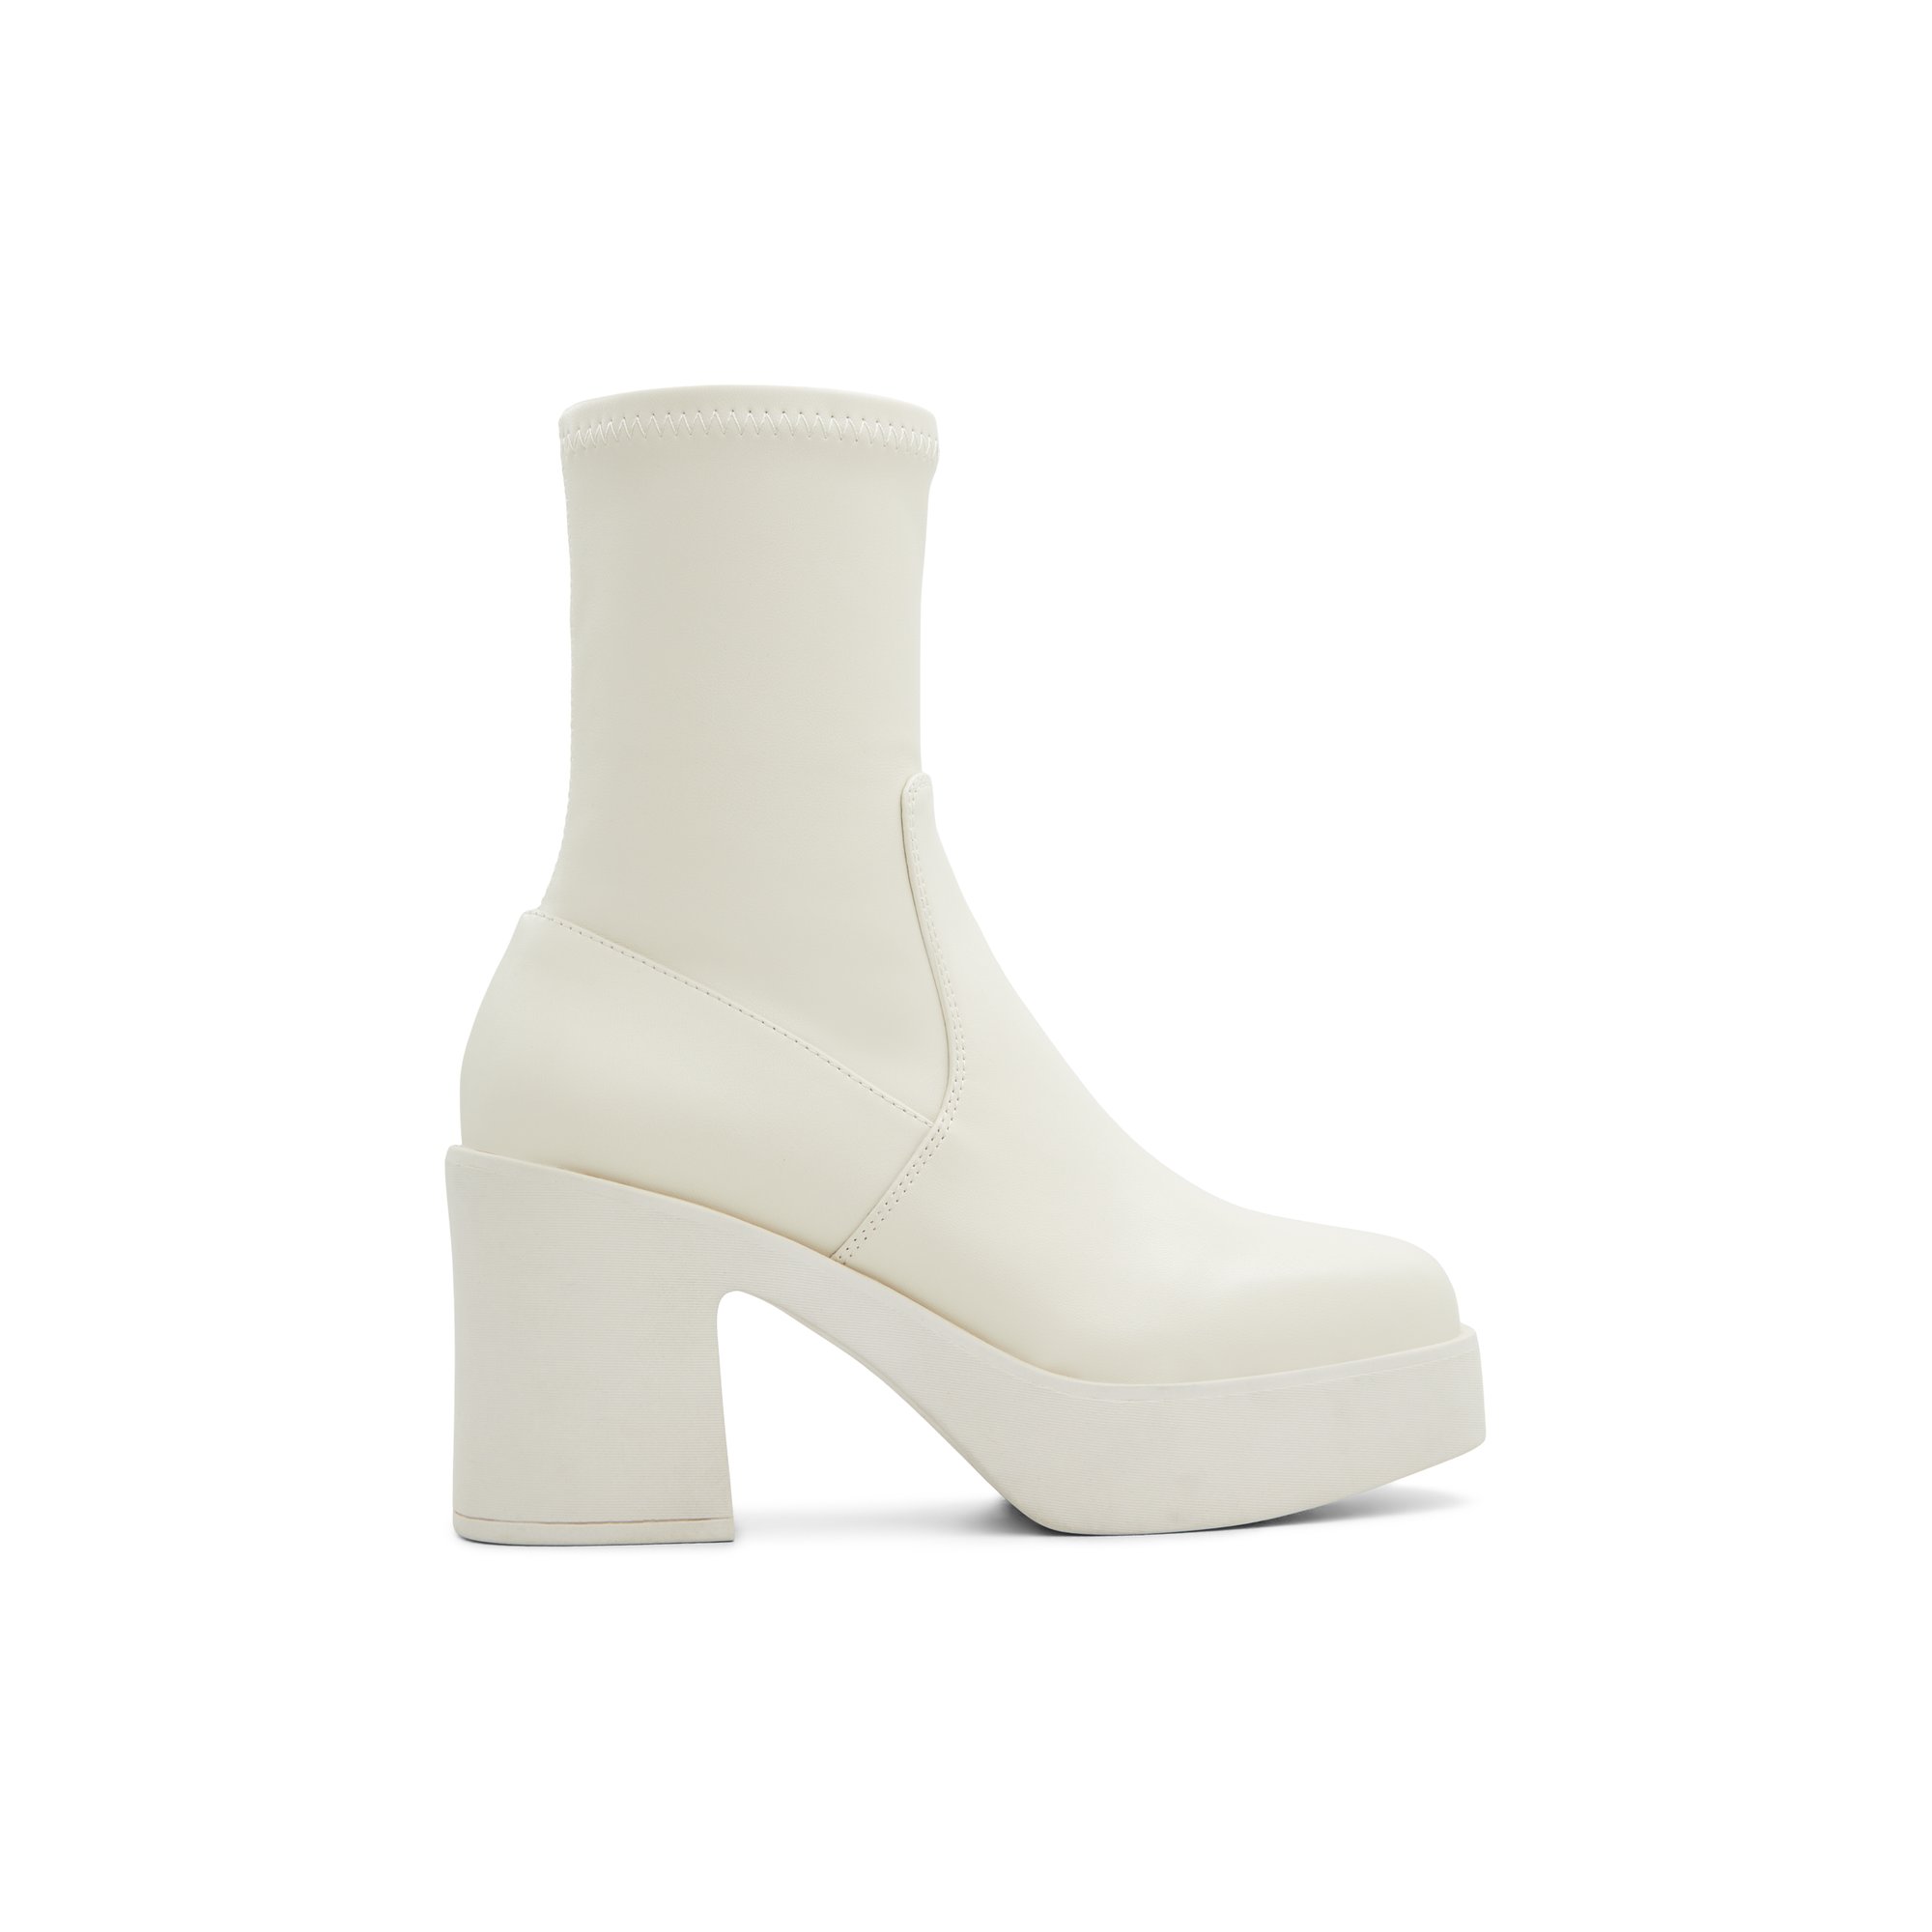 ALDO Upstep - Women's Boots Ankle - White